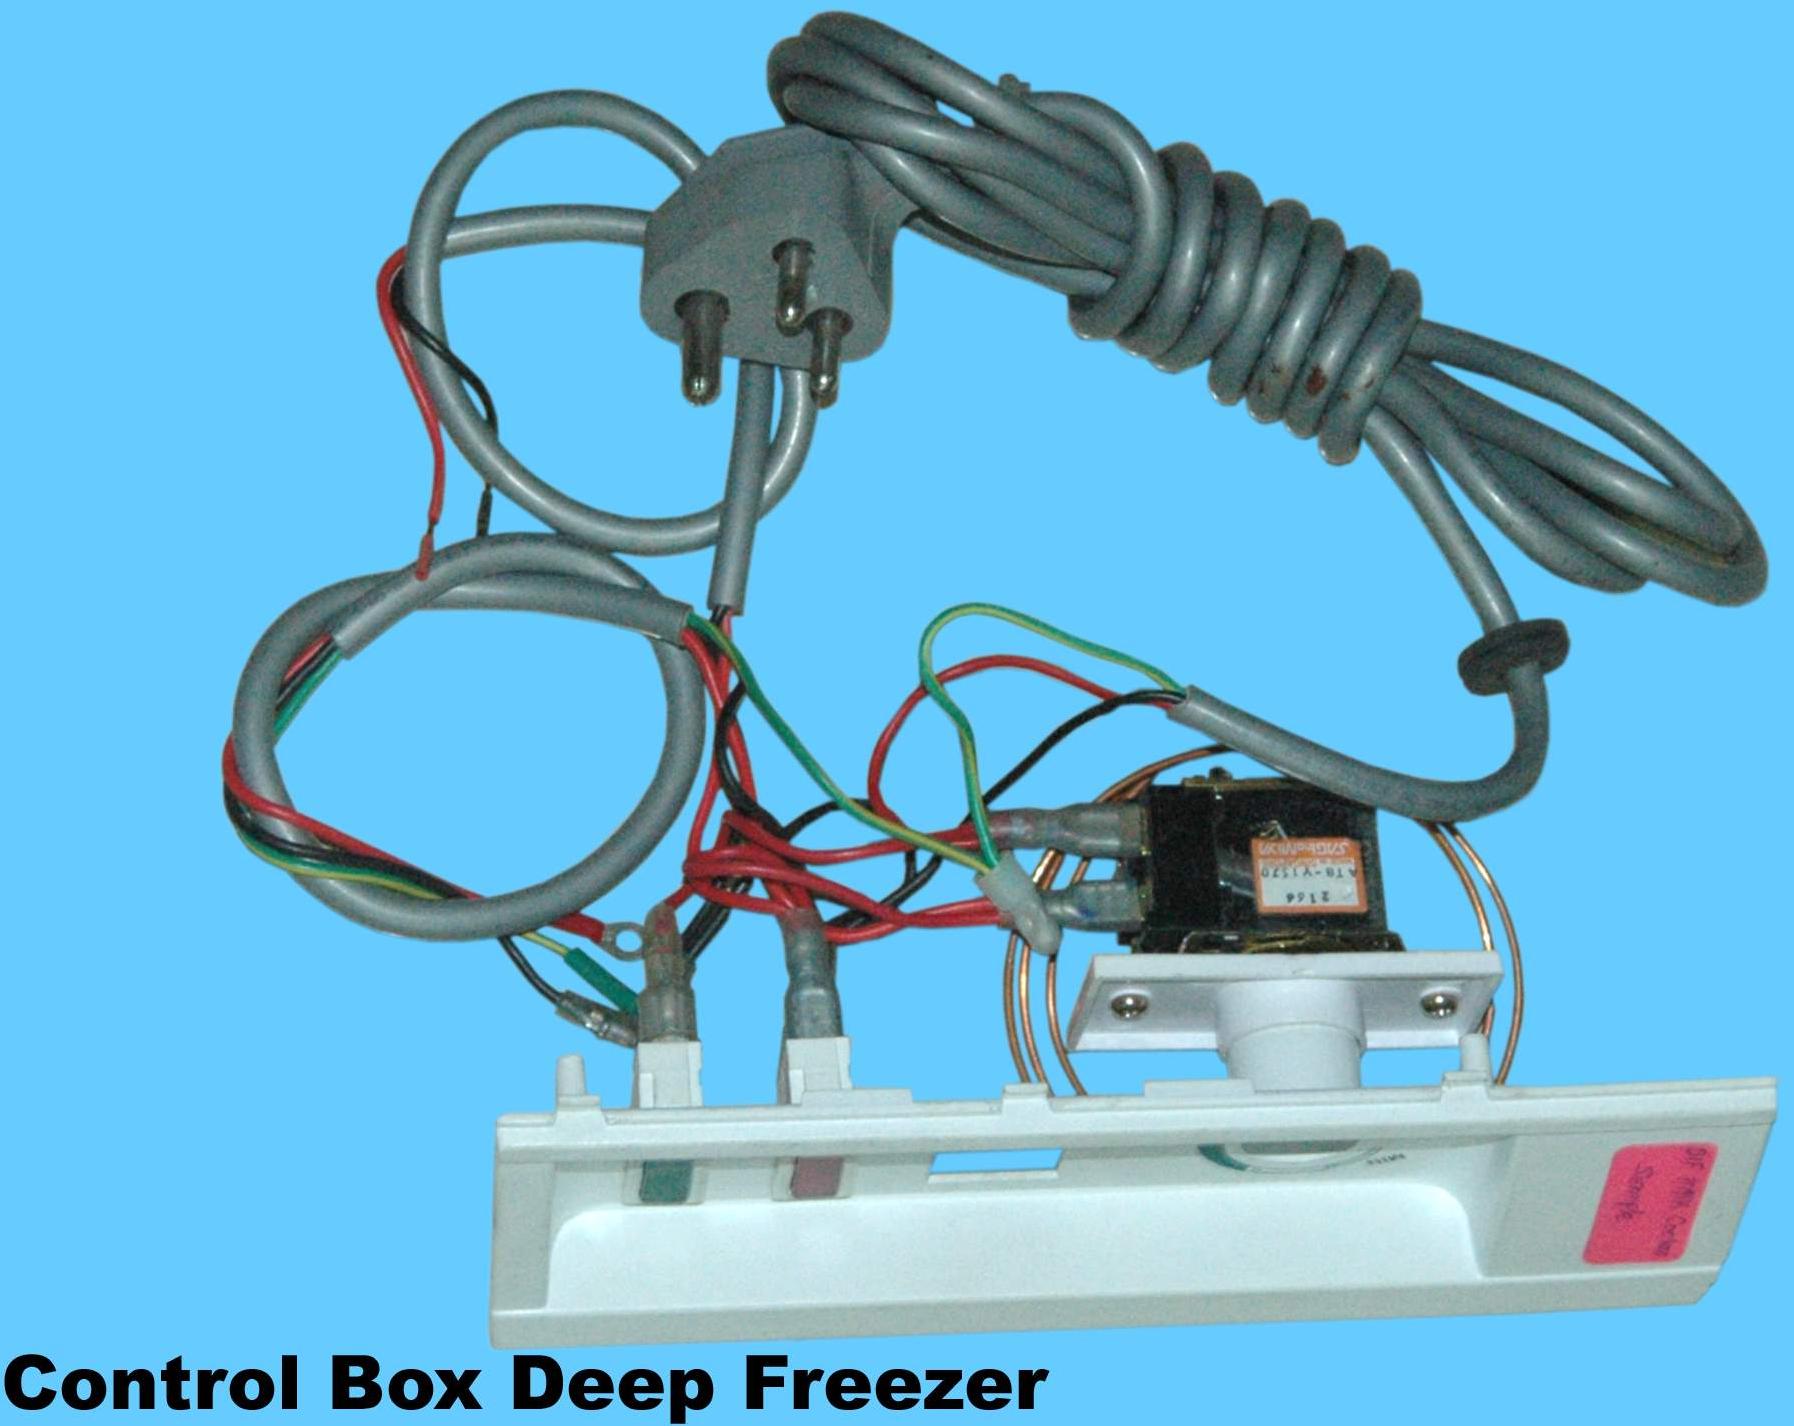 Control Box for Deep Freezer